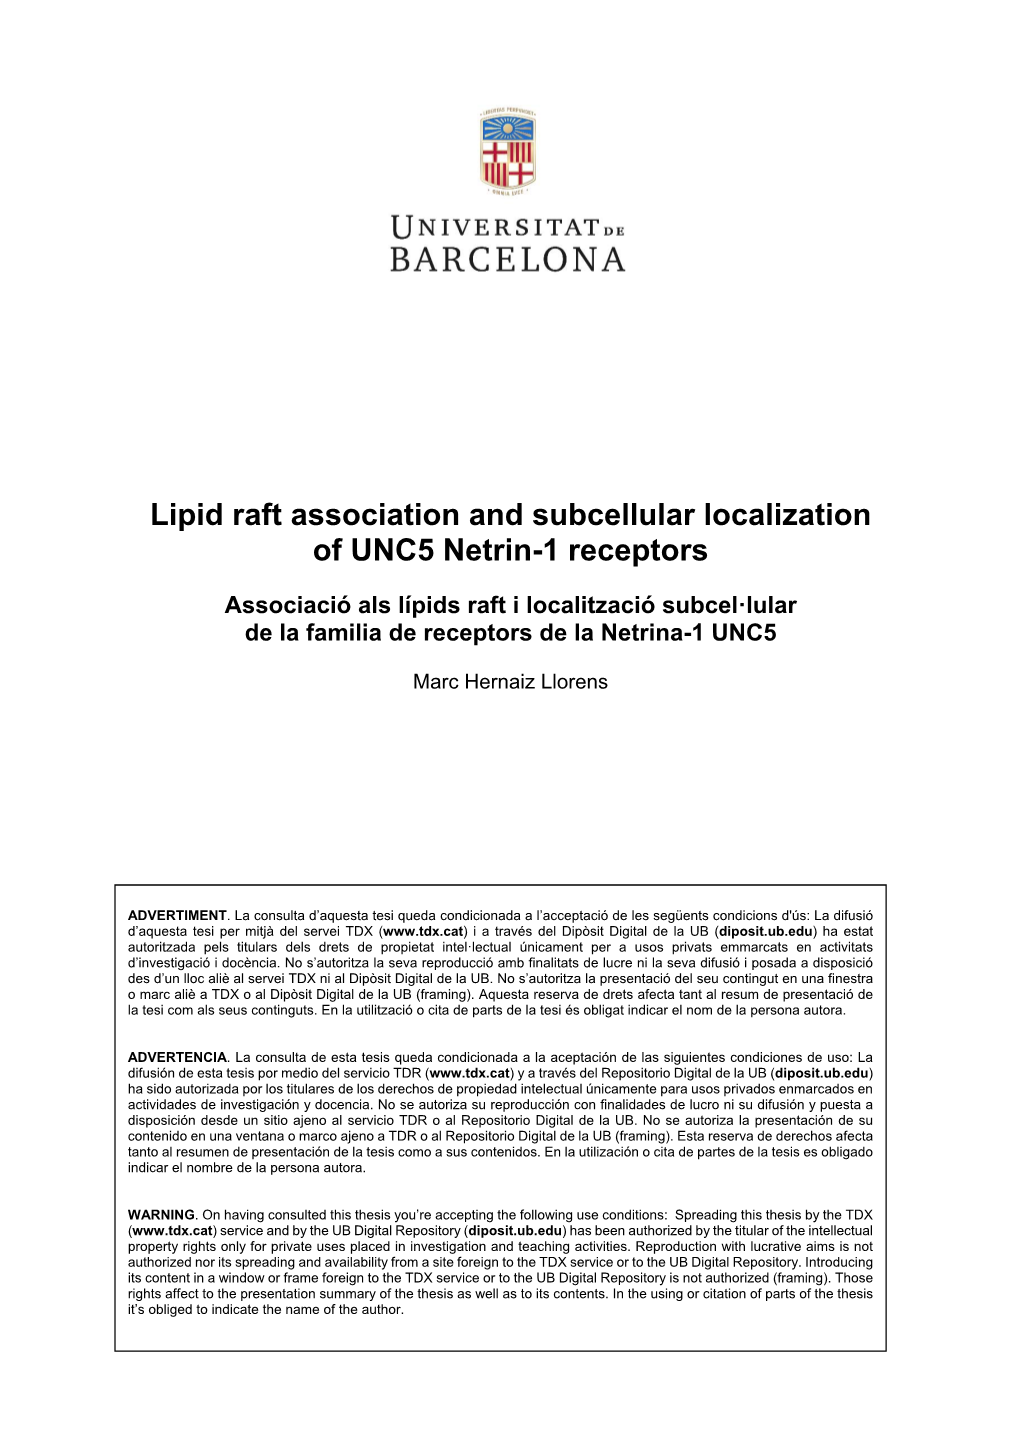 Lipid Raft Association and Subcellular Localization of UNC5 Netrin-1 Receptors